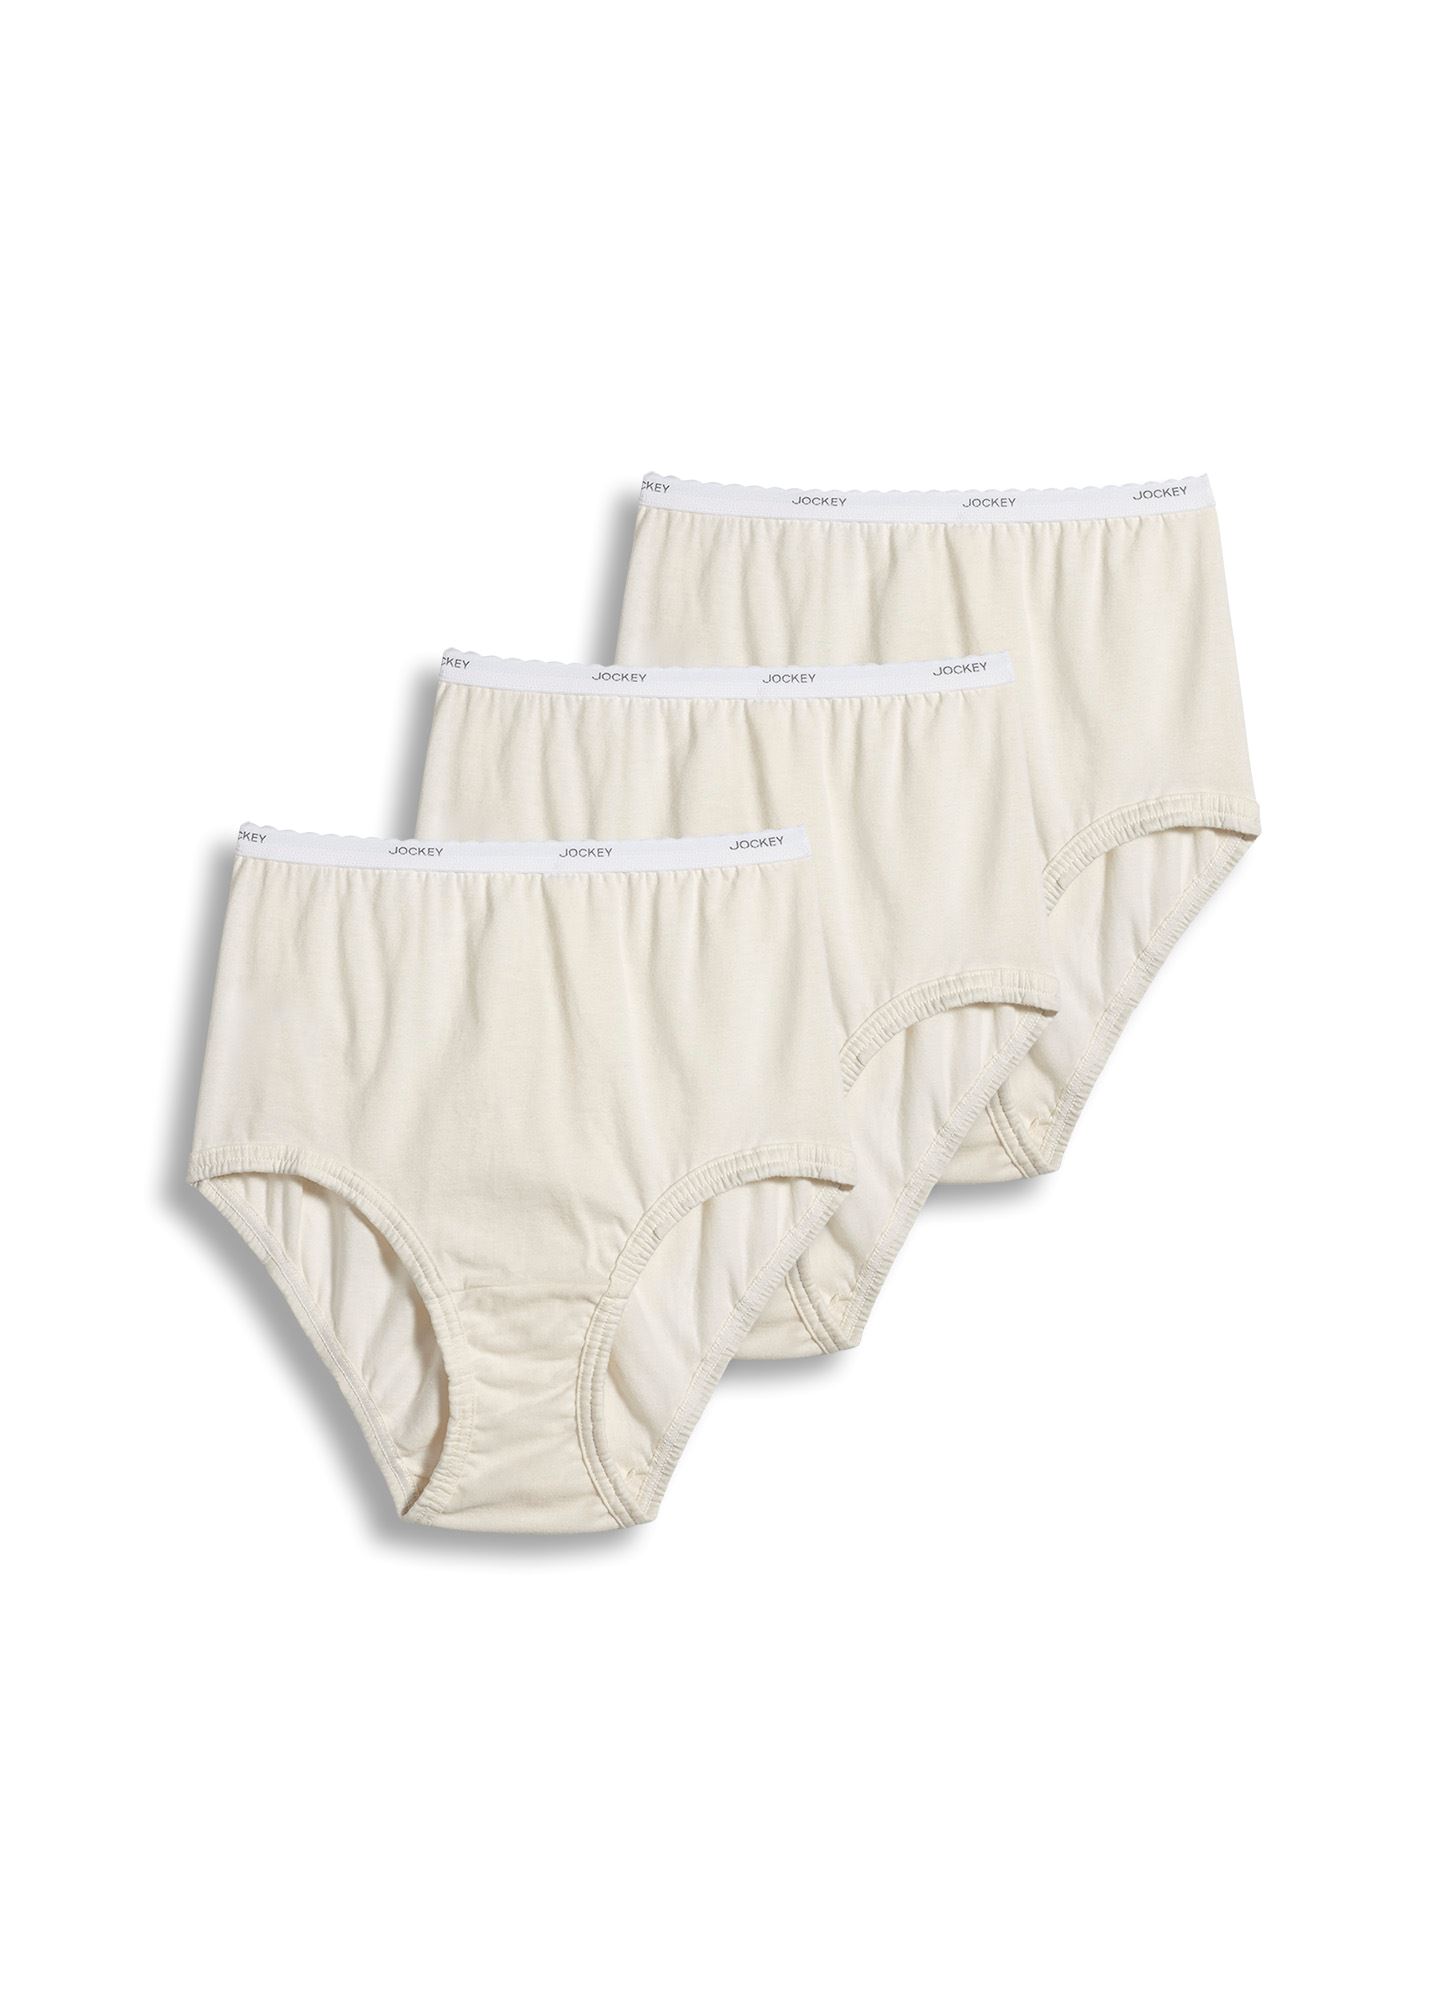 Jockey Women's Underwear Classic French Cut - 3 Pack, Sienna